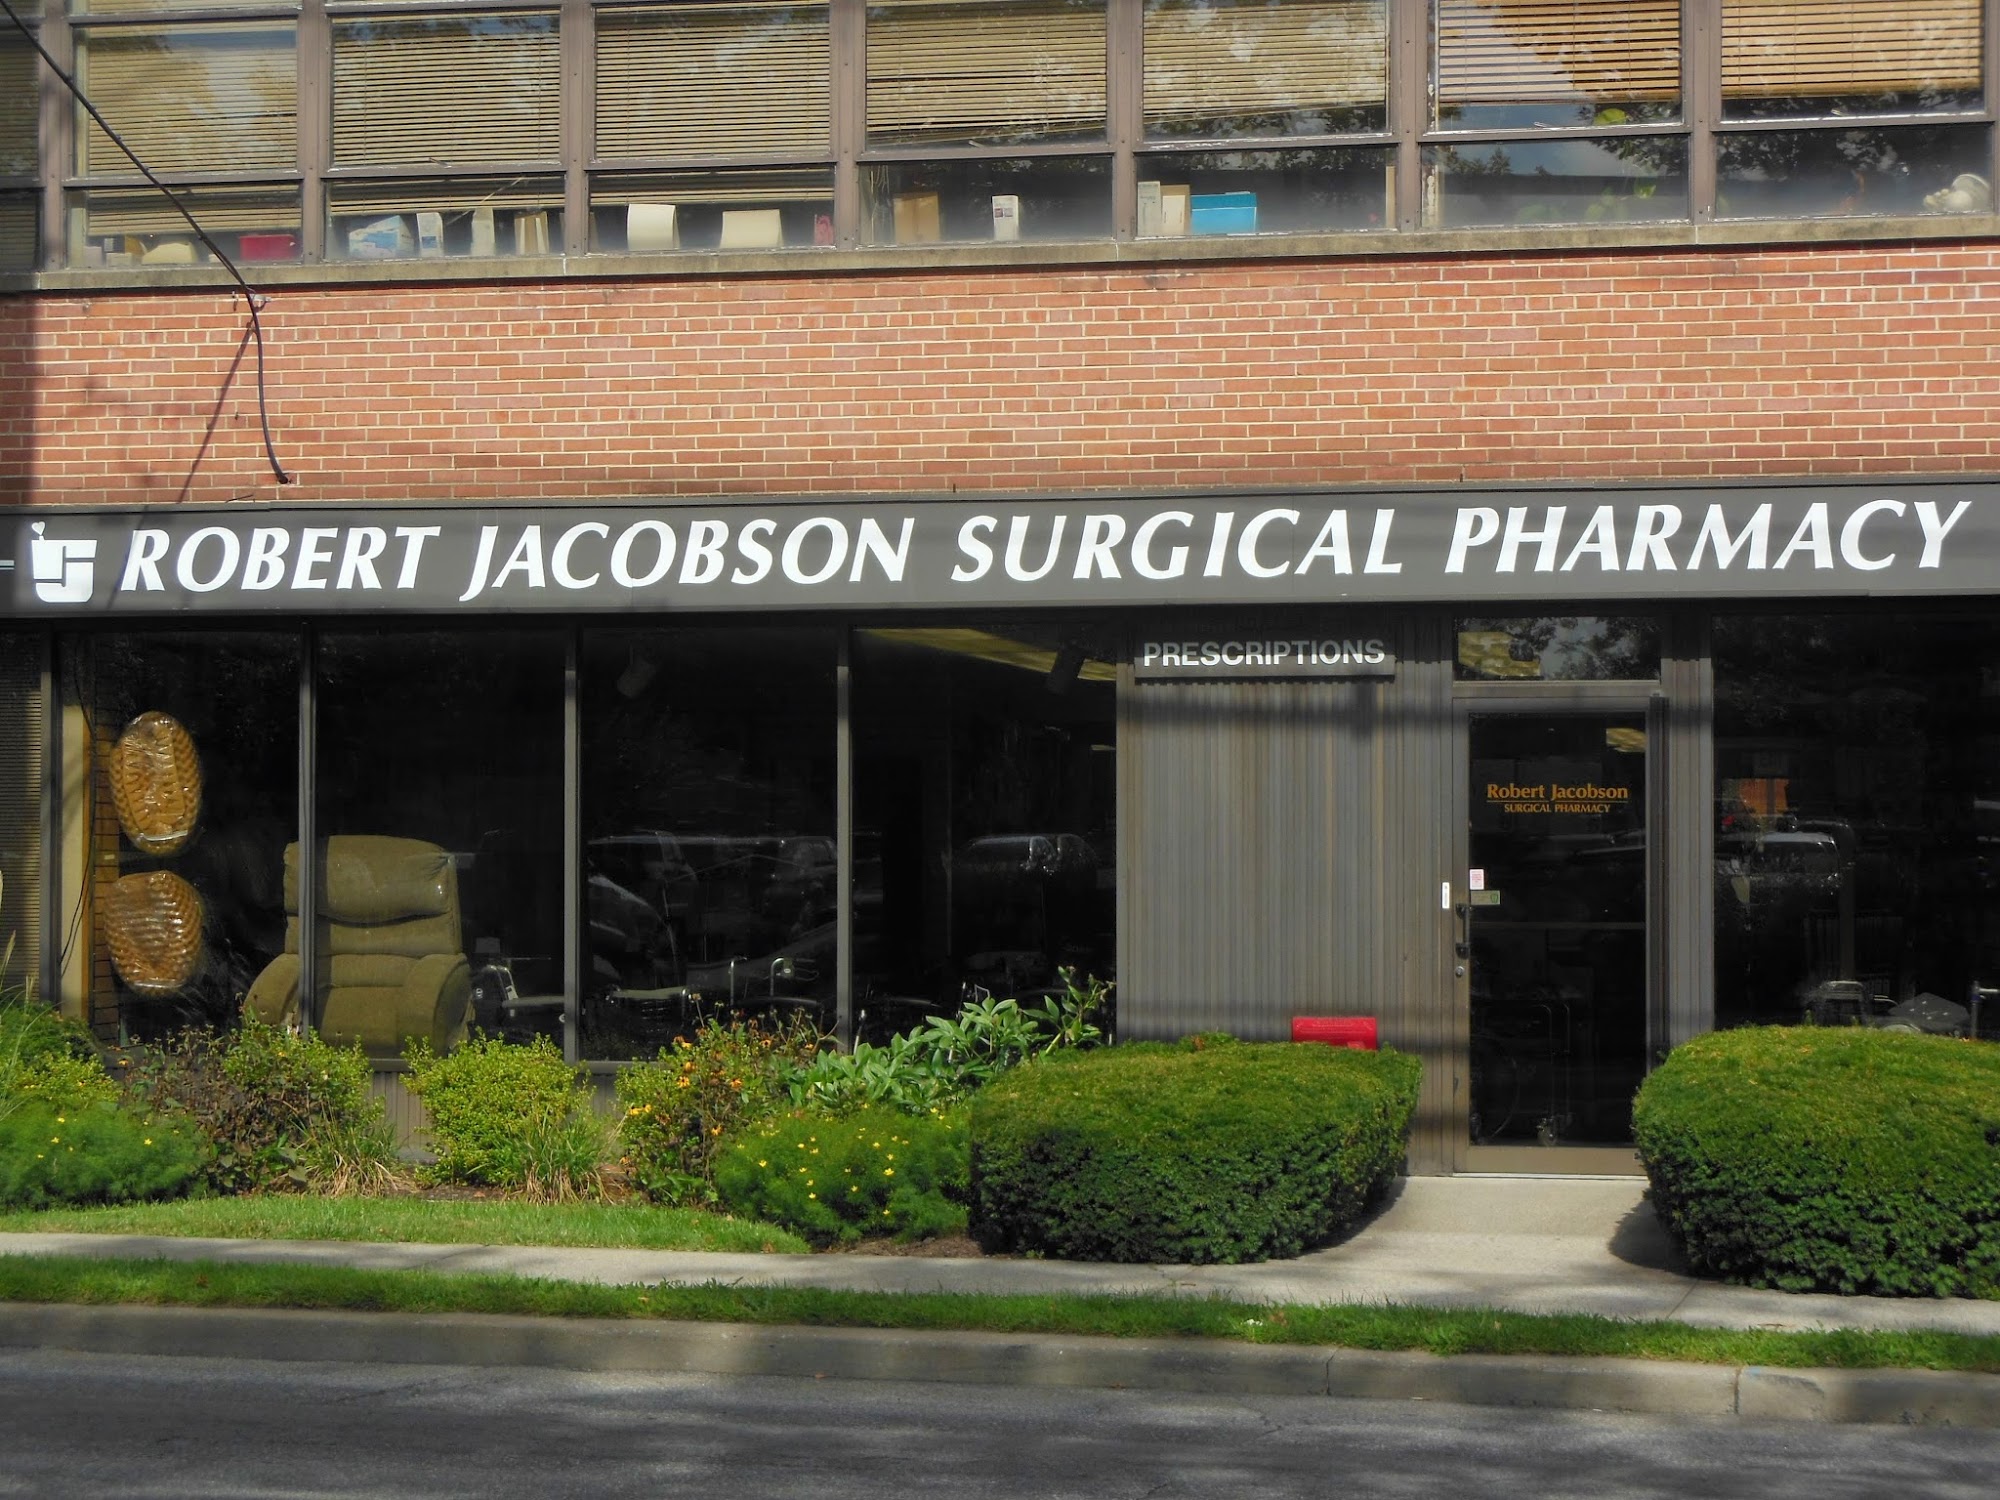 Robert Jacobson Surgical Pharmacy